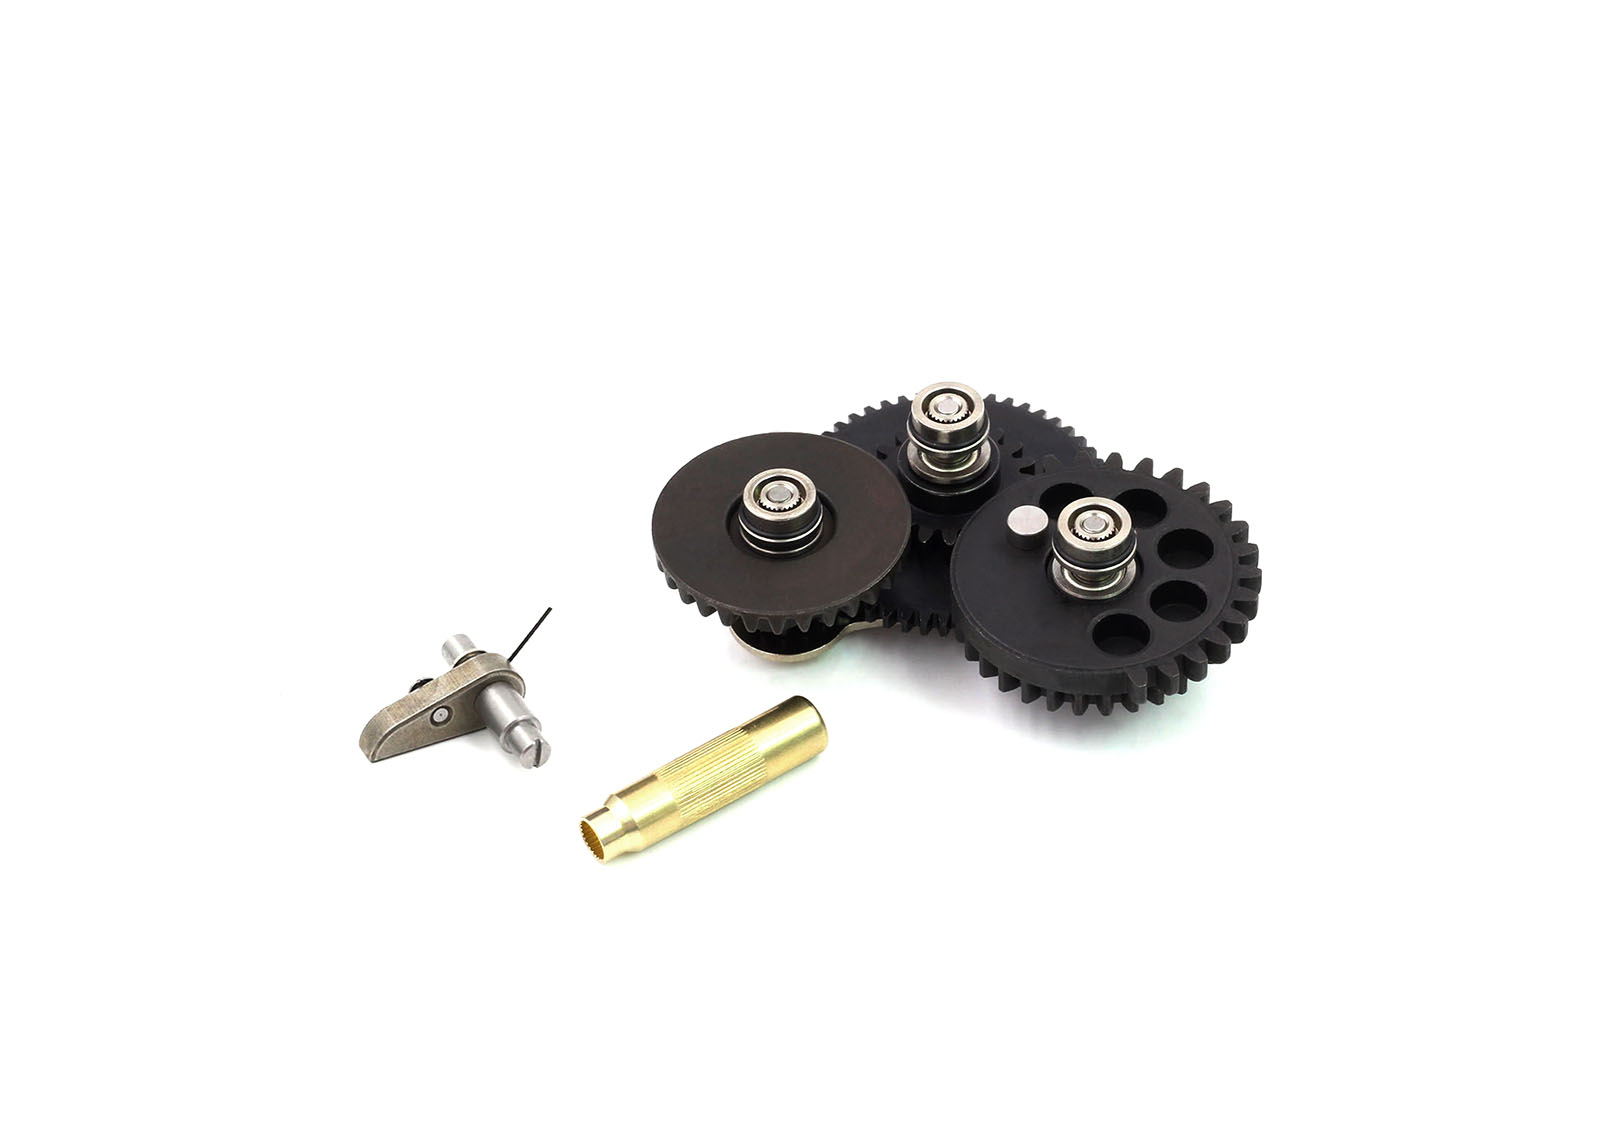 Modular Gear Set - SMOOTH 7mm Ver.2/Ver.3 (Torque 21.6:1+Gear Key) - Modify Airsoft parts